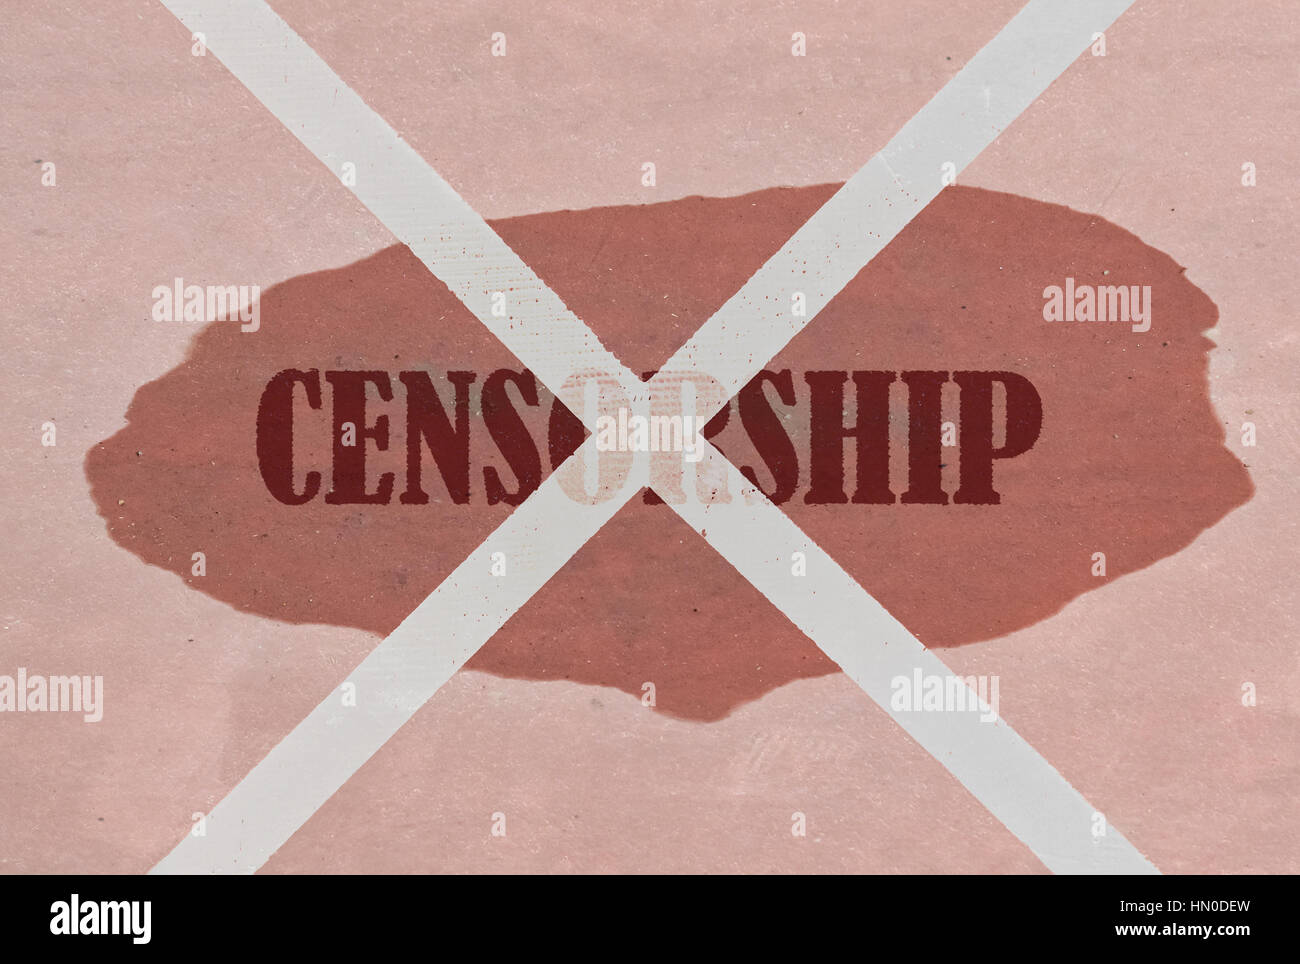 Strikethrough word Censorship written on pink background Stock Photo